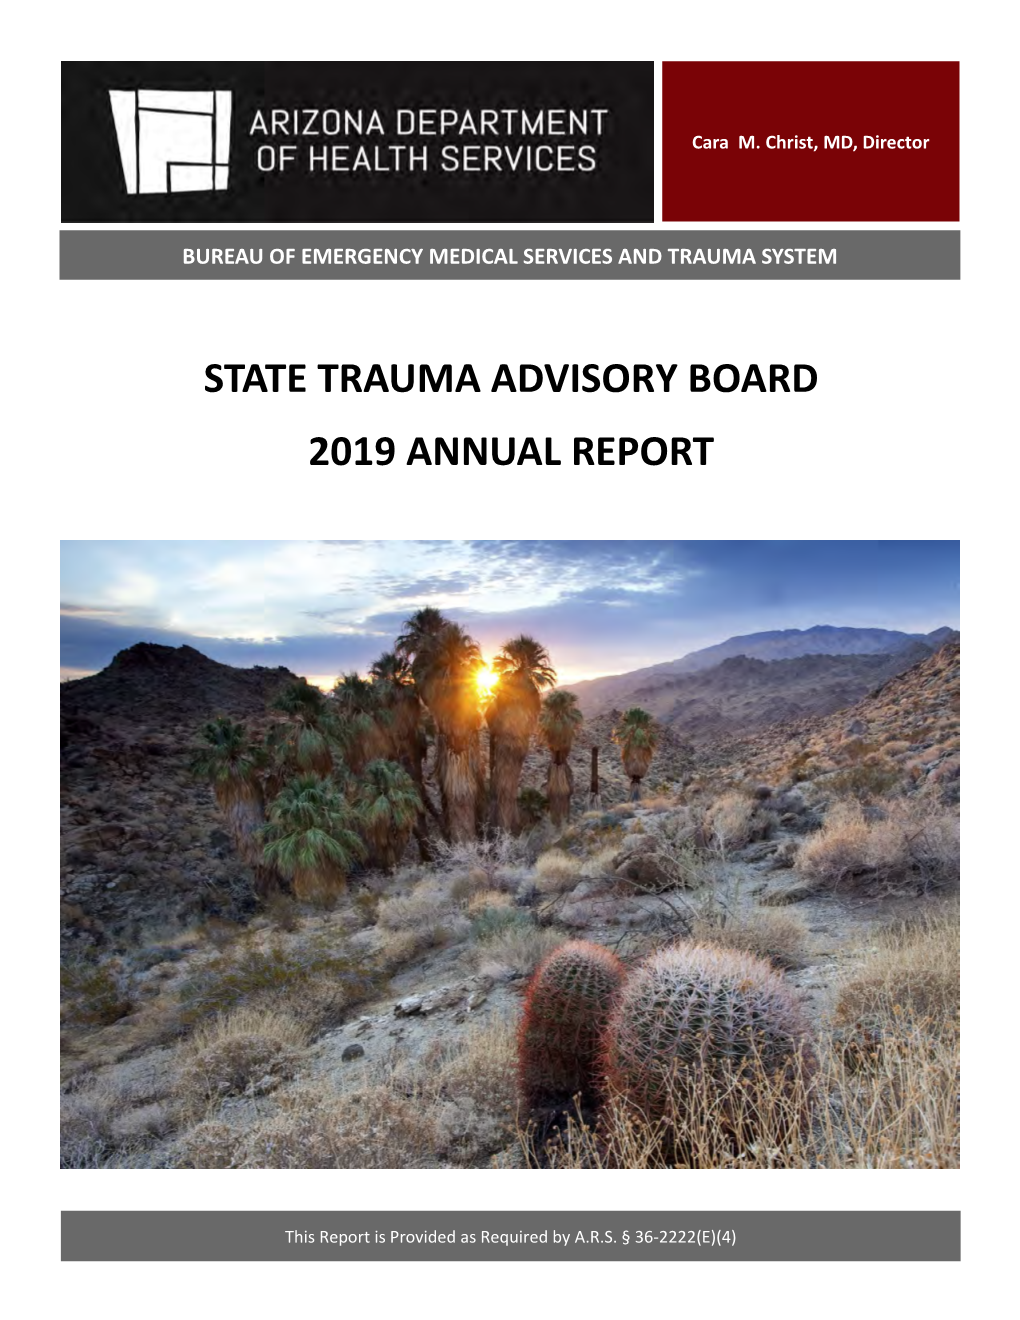 State Trauma Advisory Board 2019 Annual Report